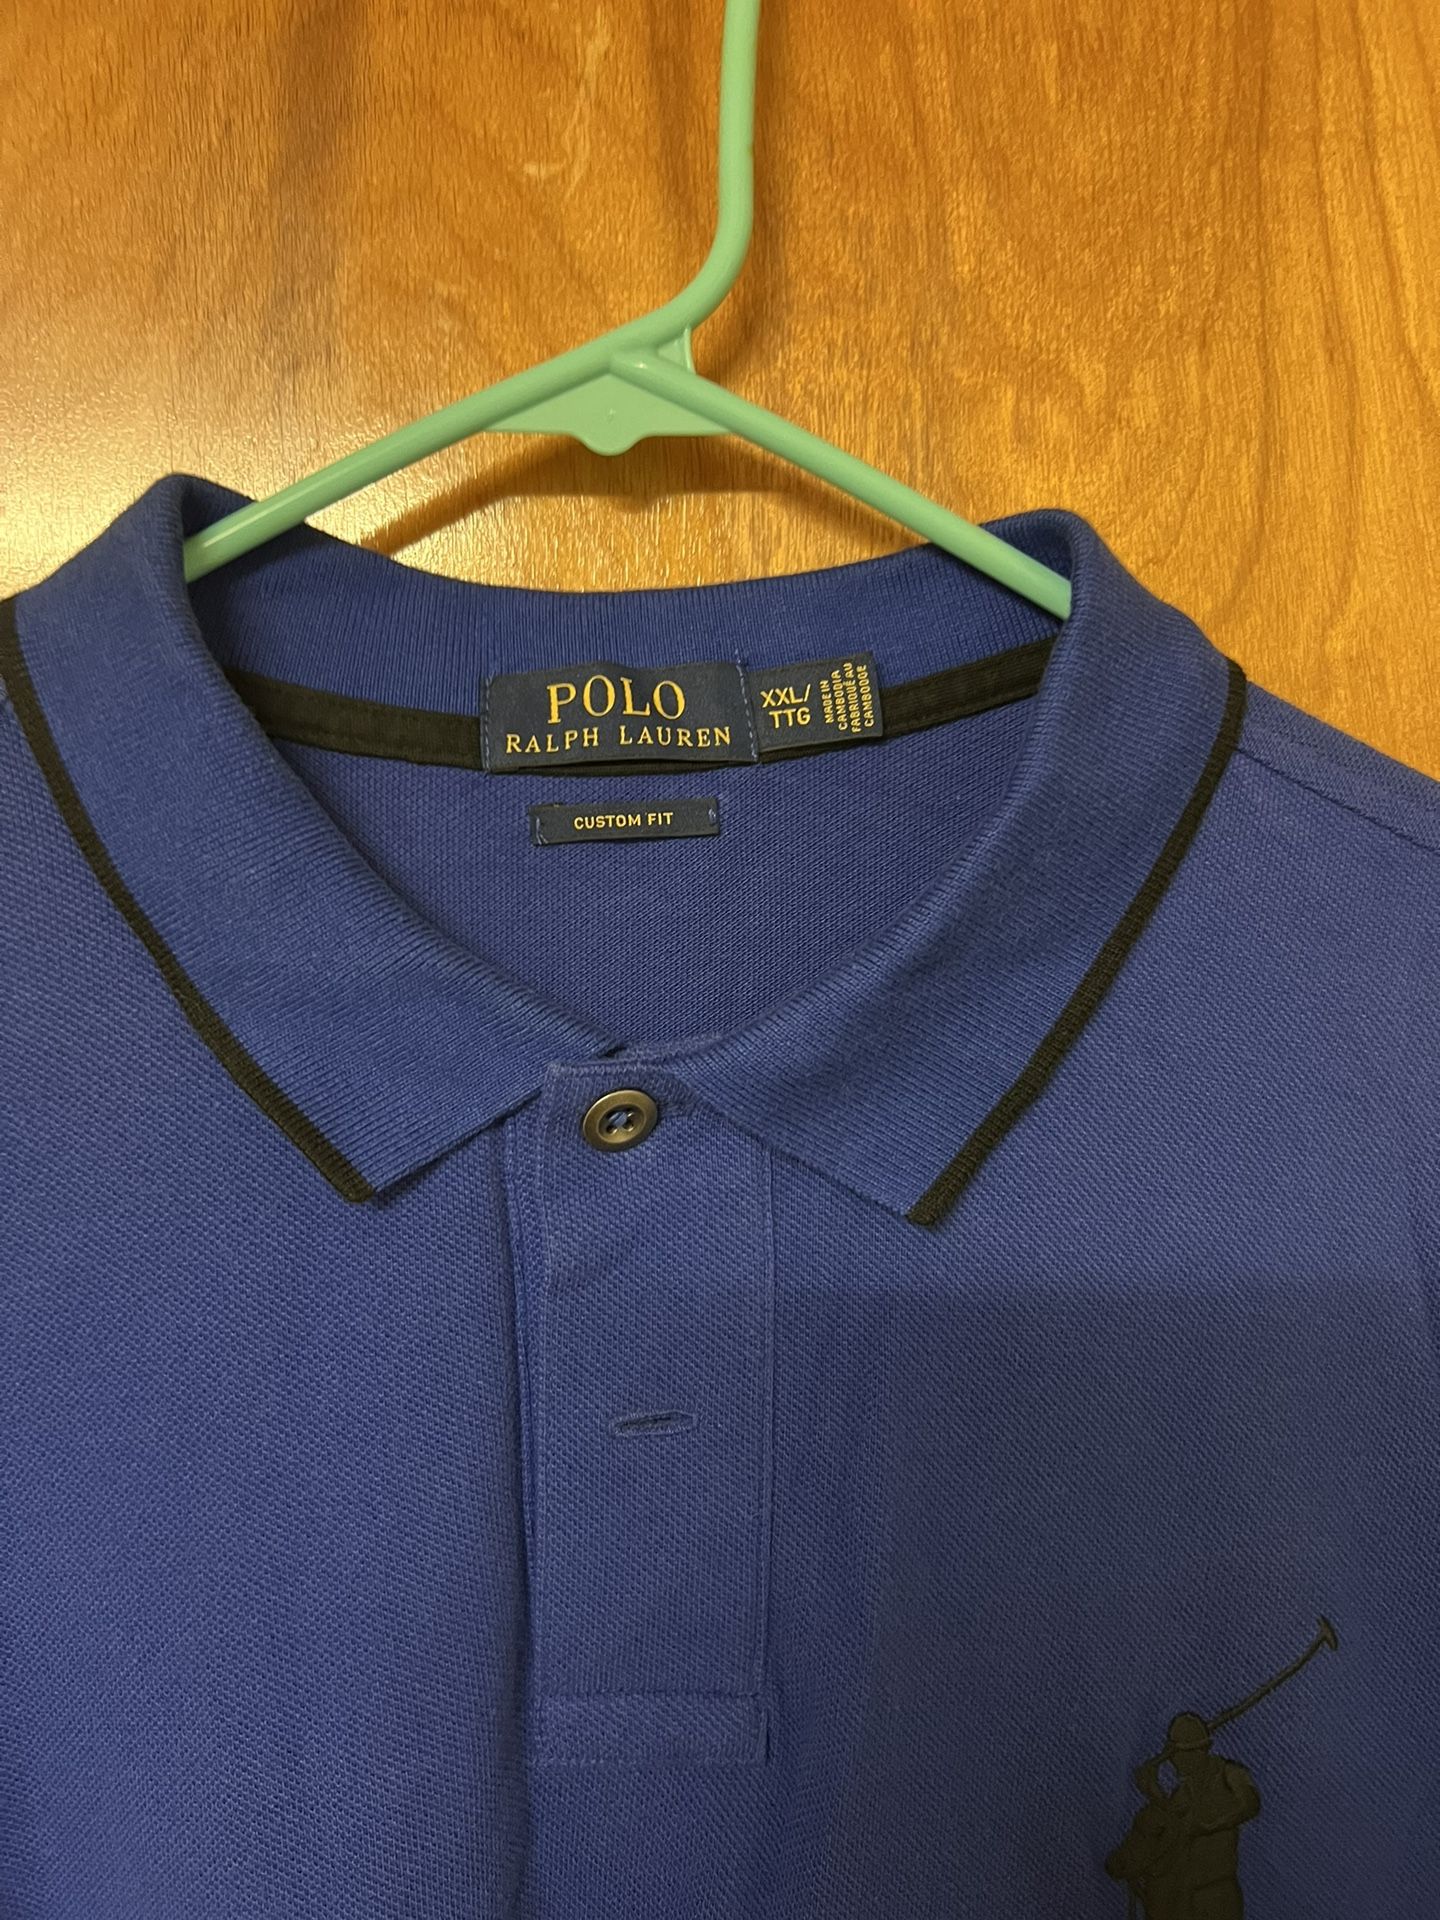 Ralph Lauren Polo, Sweaters, Vest, Shirts $20